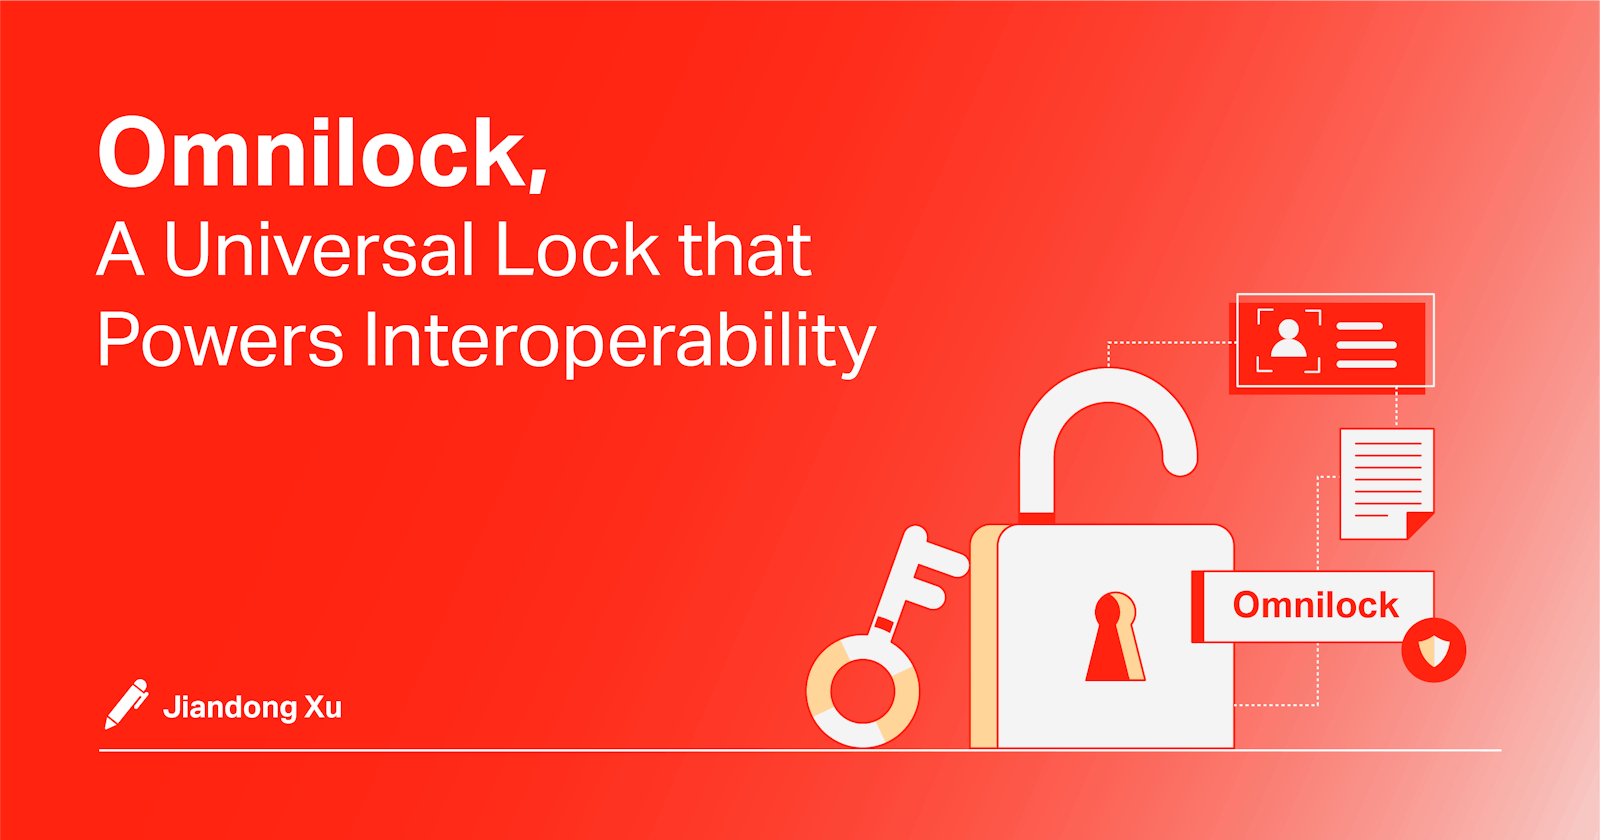 Omnilock, a Universal Lock that Powers Interoperability